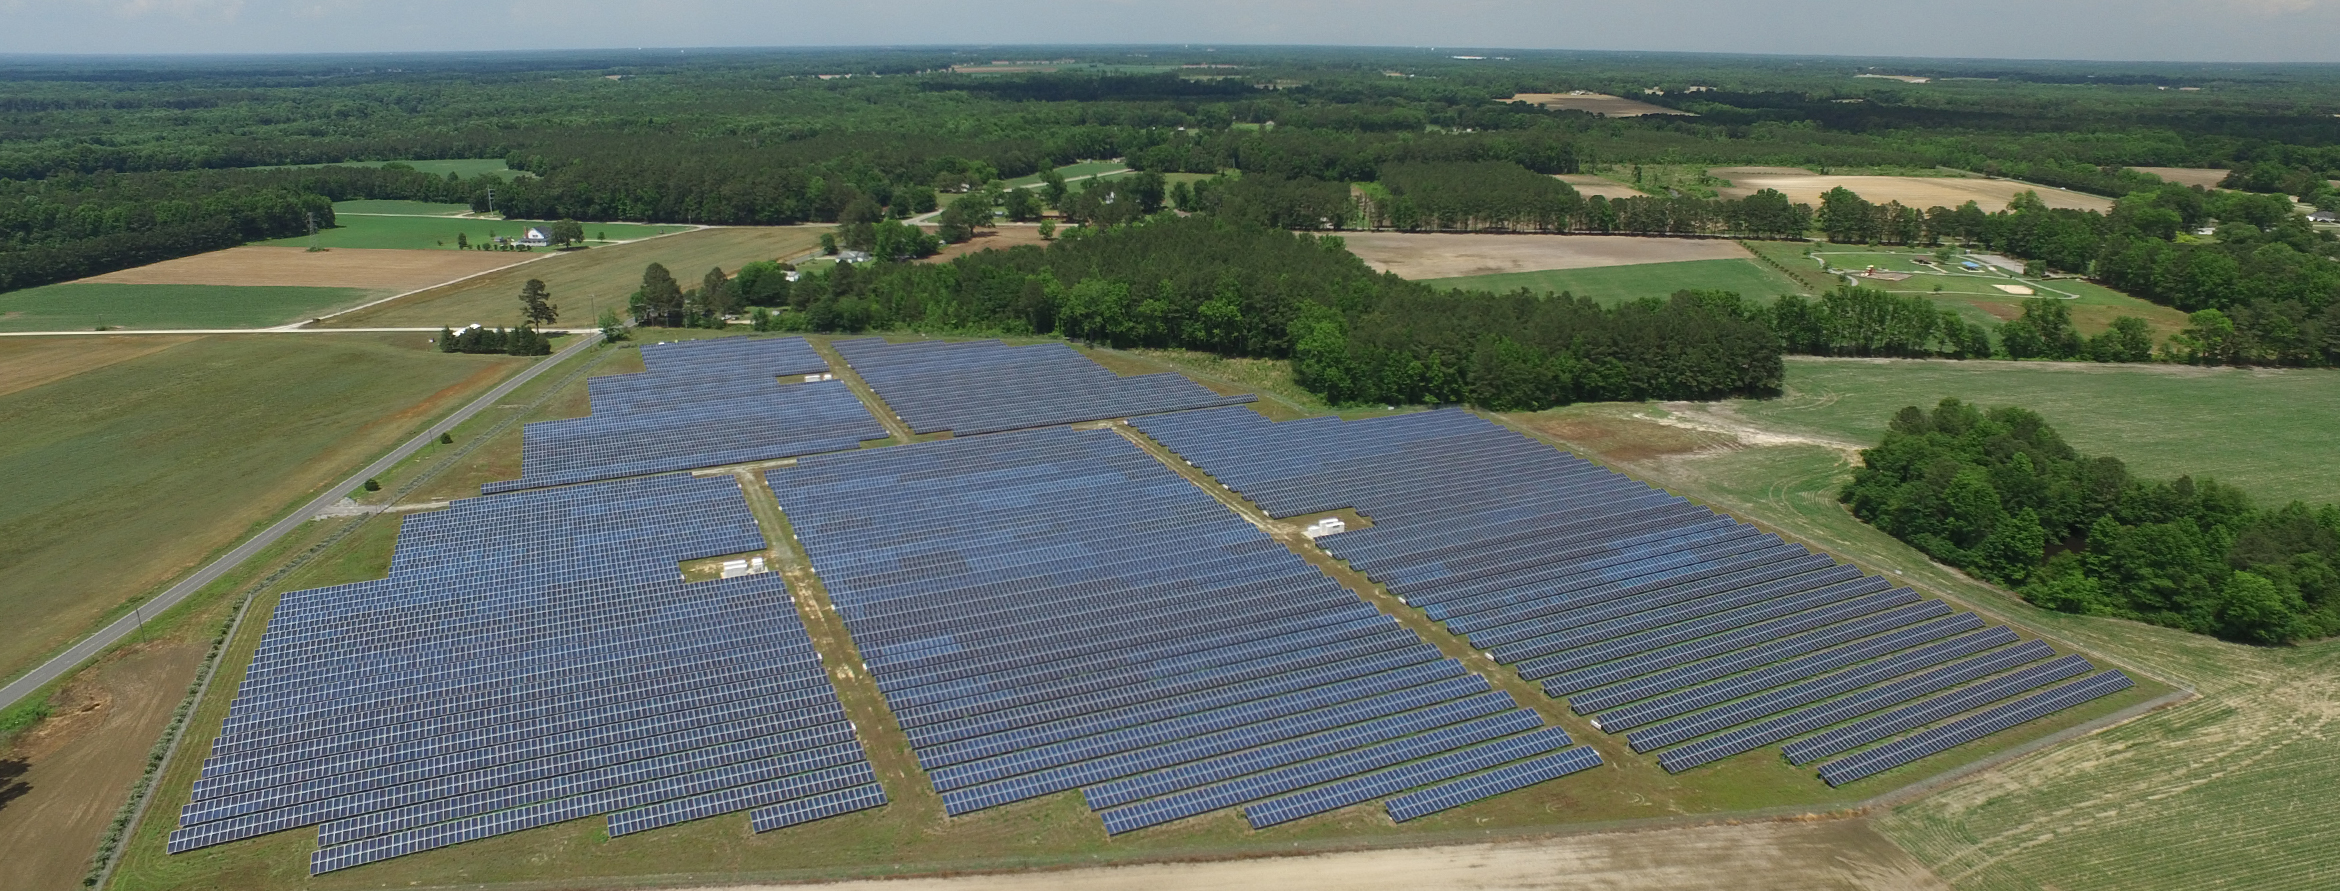 Cypress Creek solar facility in Asheville, North Carolina